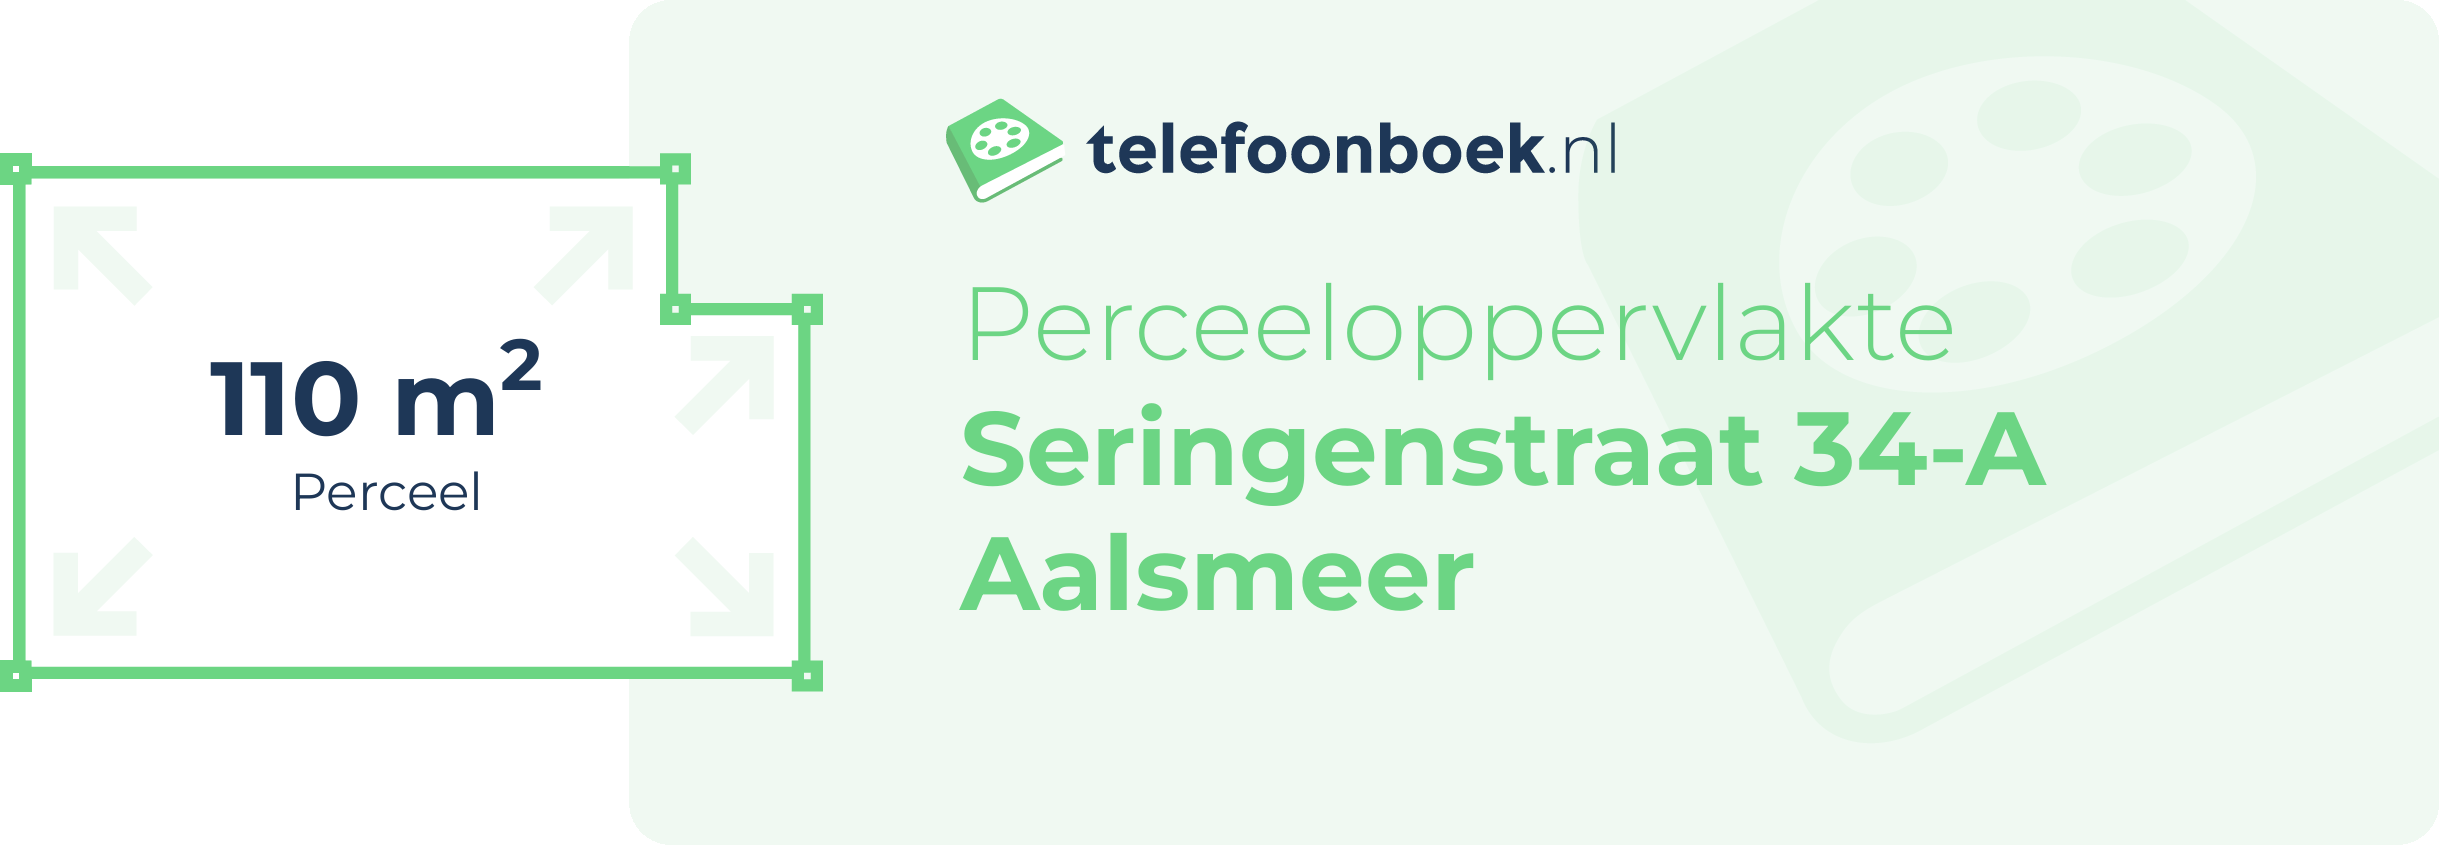 Perceeloppervlakte Seringenstraat 34-A Aalsmeer